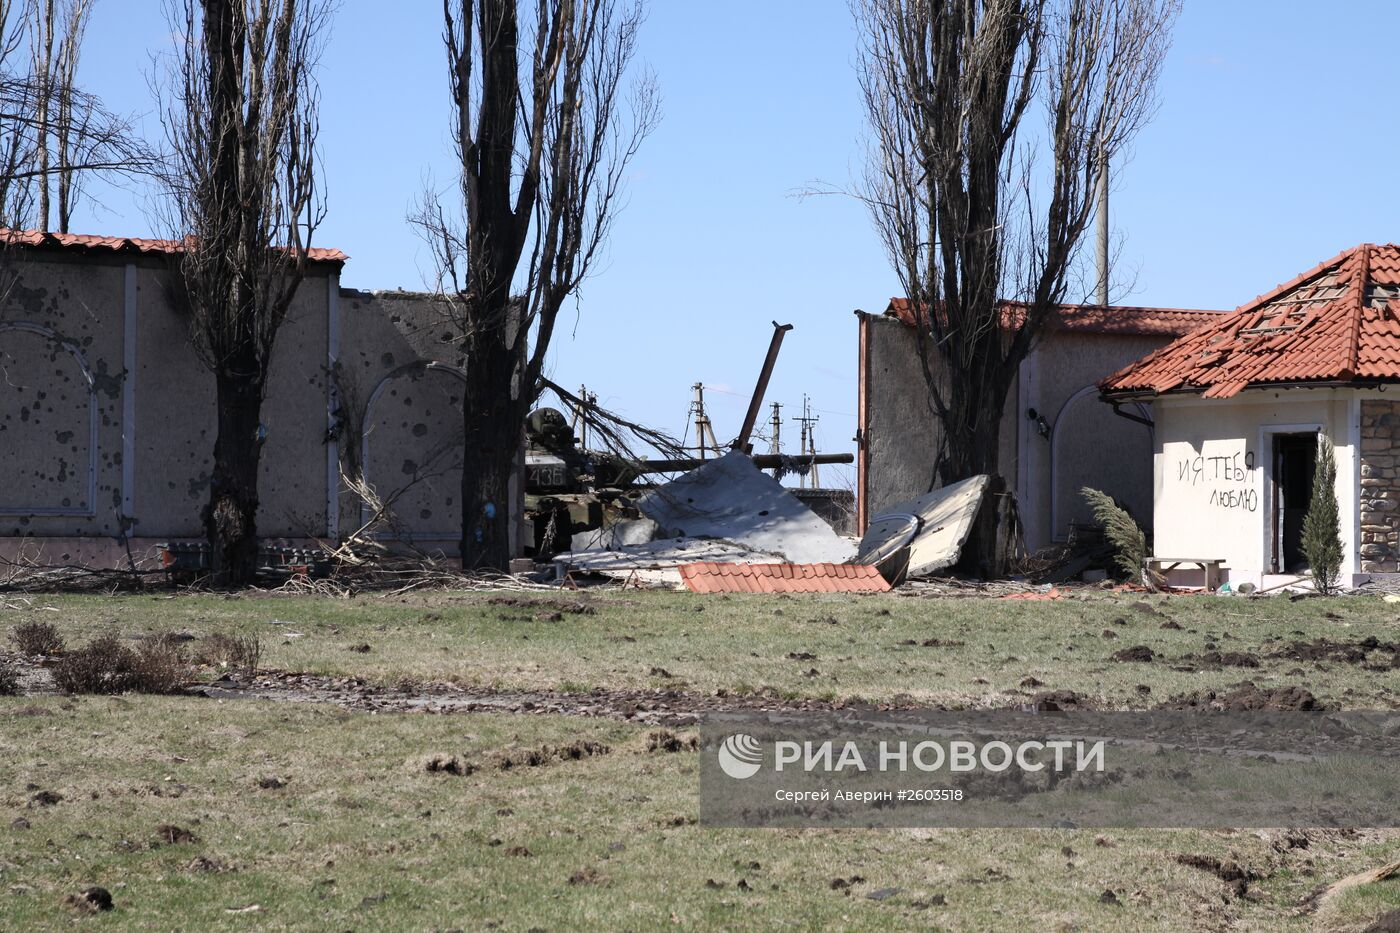 Представители ОБСЕ посетили поселок Спартак в Донецкой области